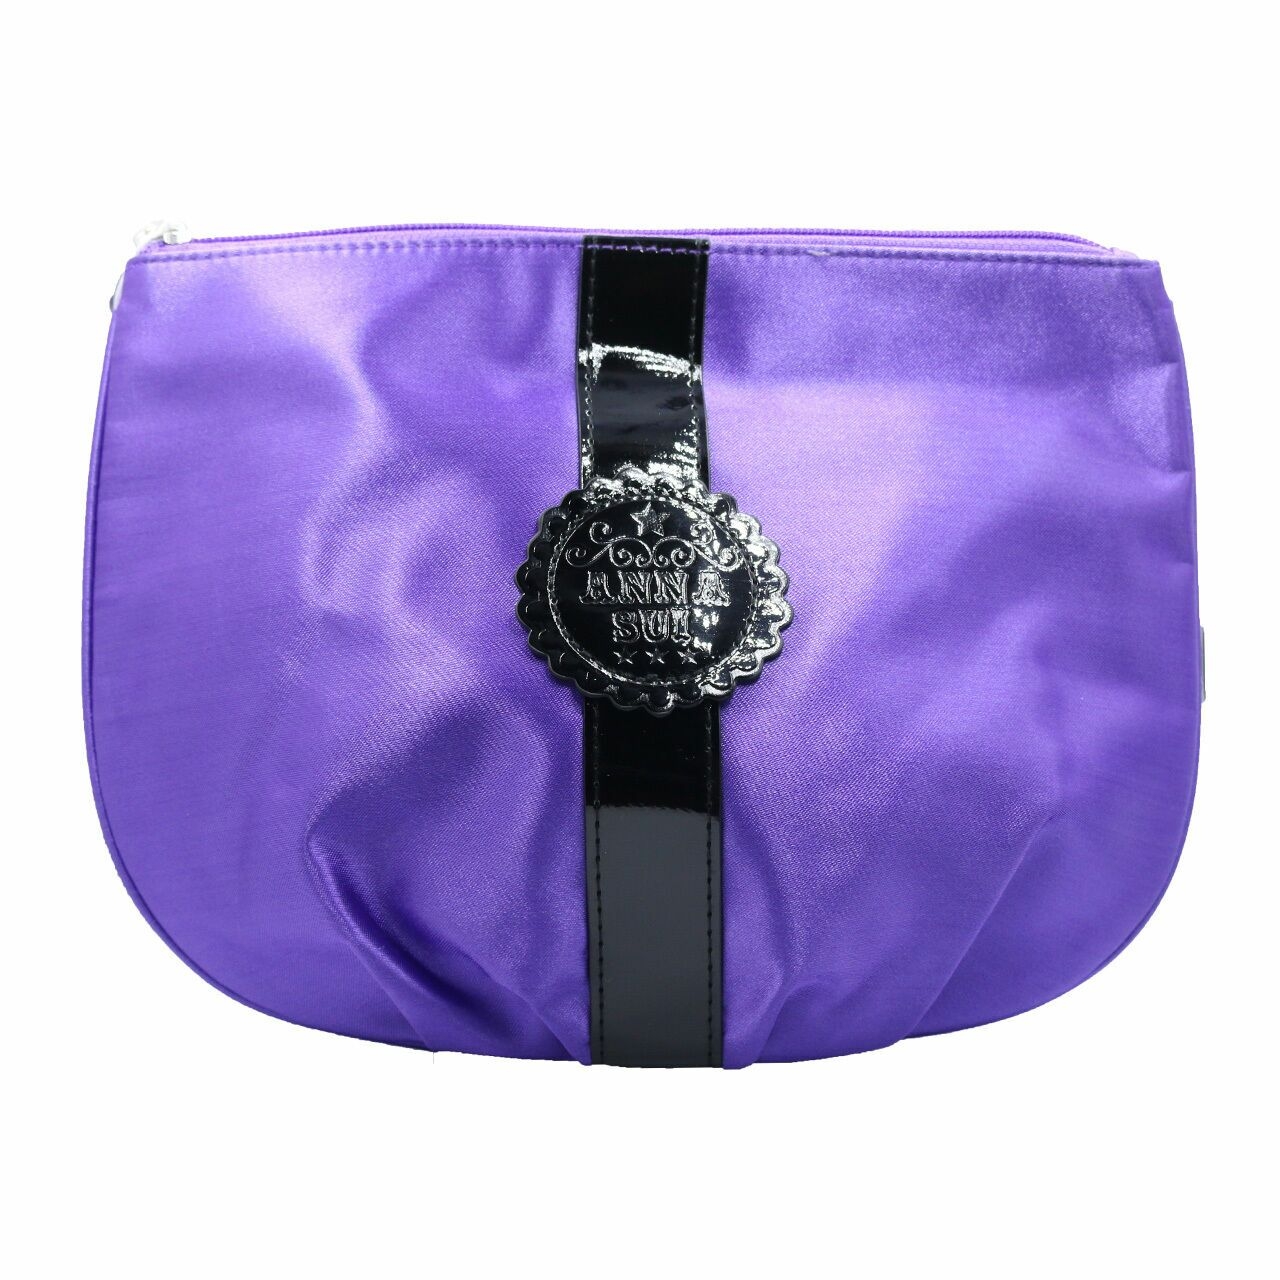 Anna Sui Purple & Black Pouch